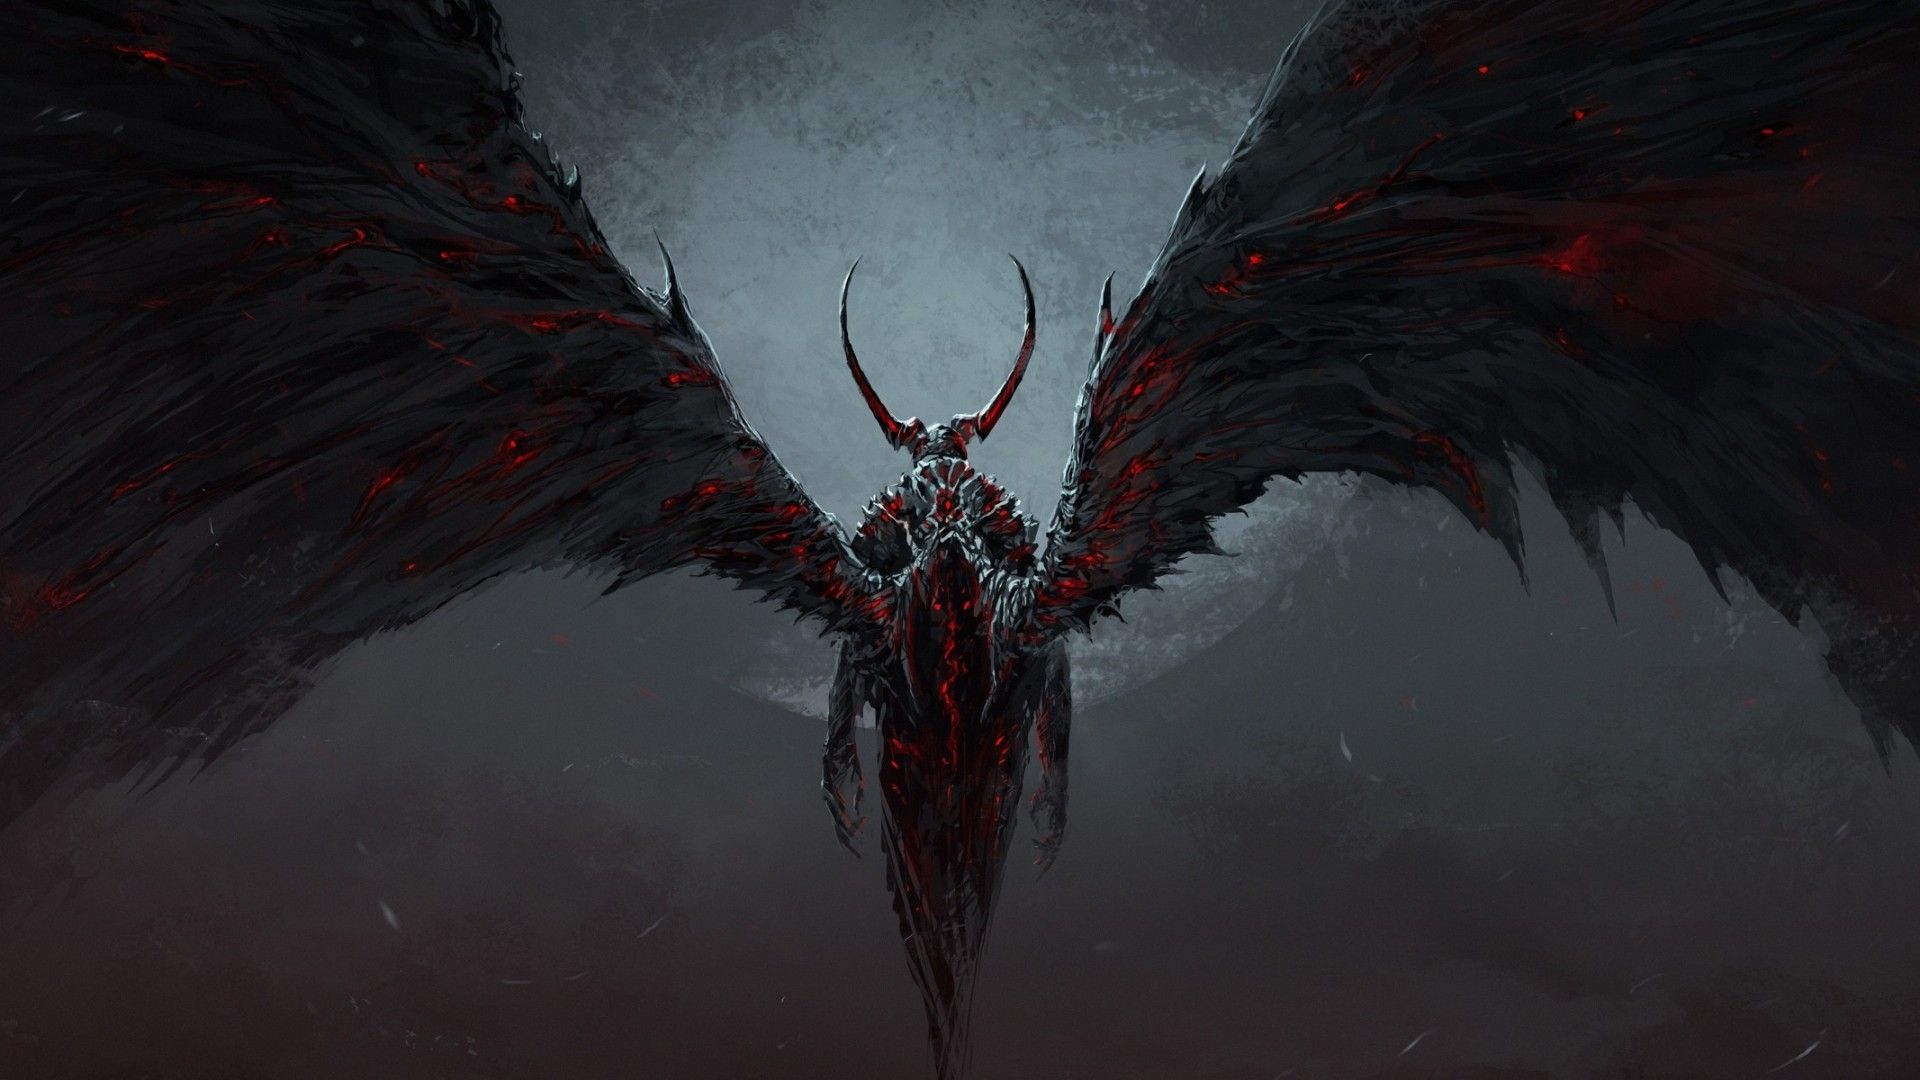 Download 1920x1080 Demon, Black Wings, Horns, Fantasy Creature Wallpaper for Widescreen